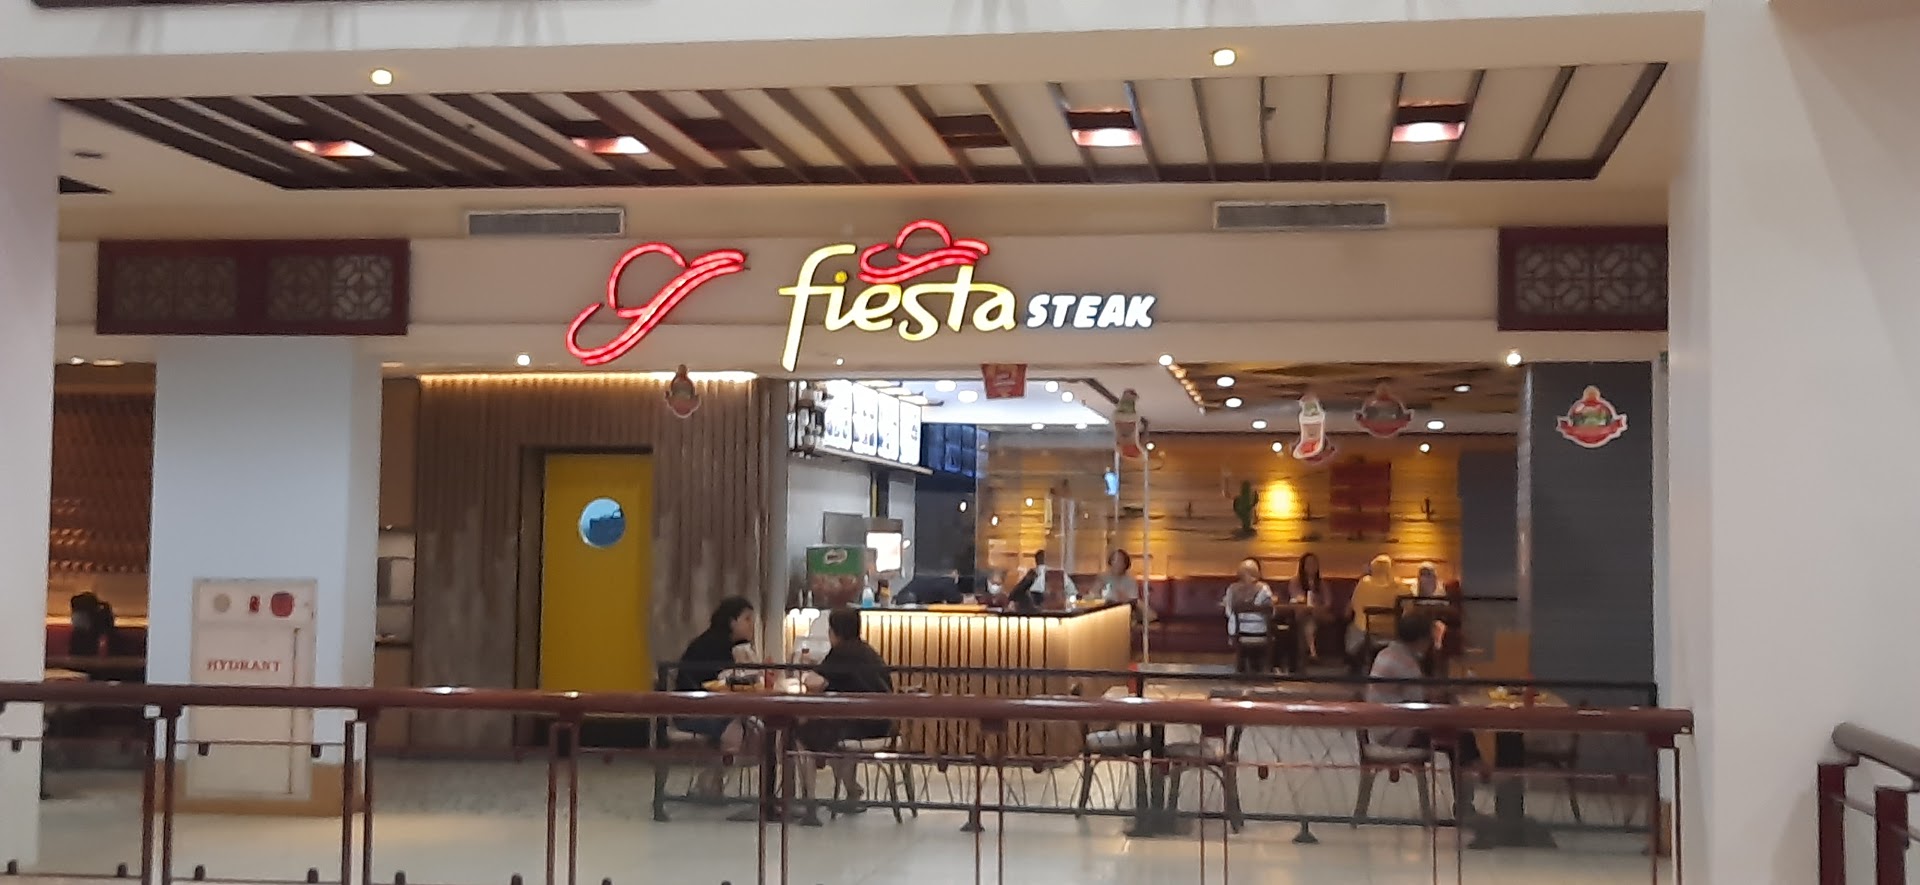 Gambar Fiesta Steak